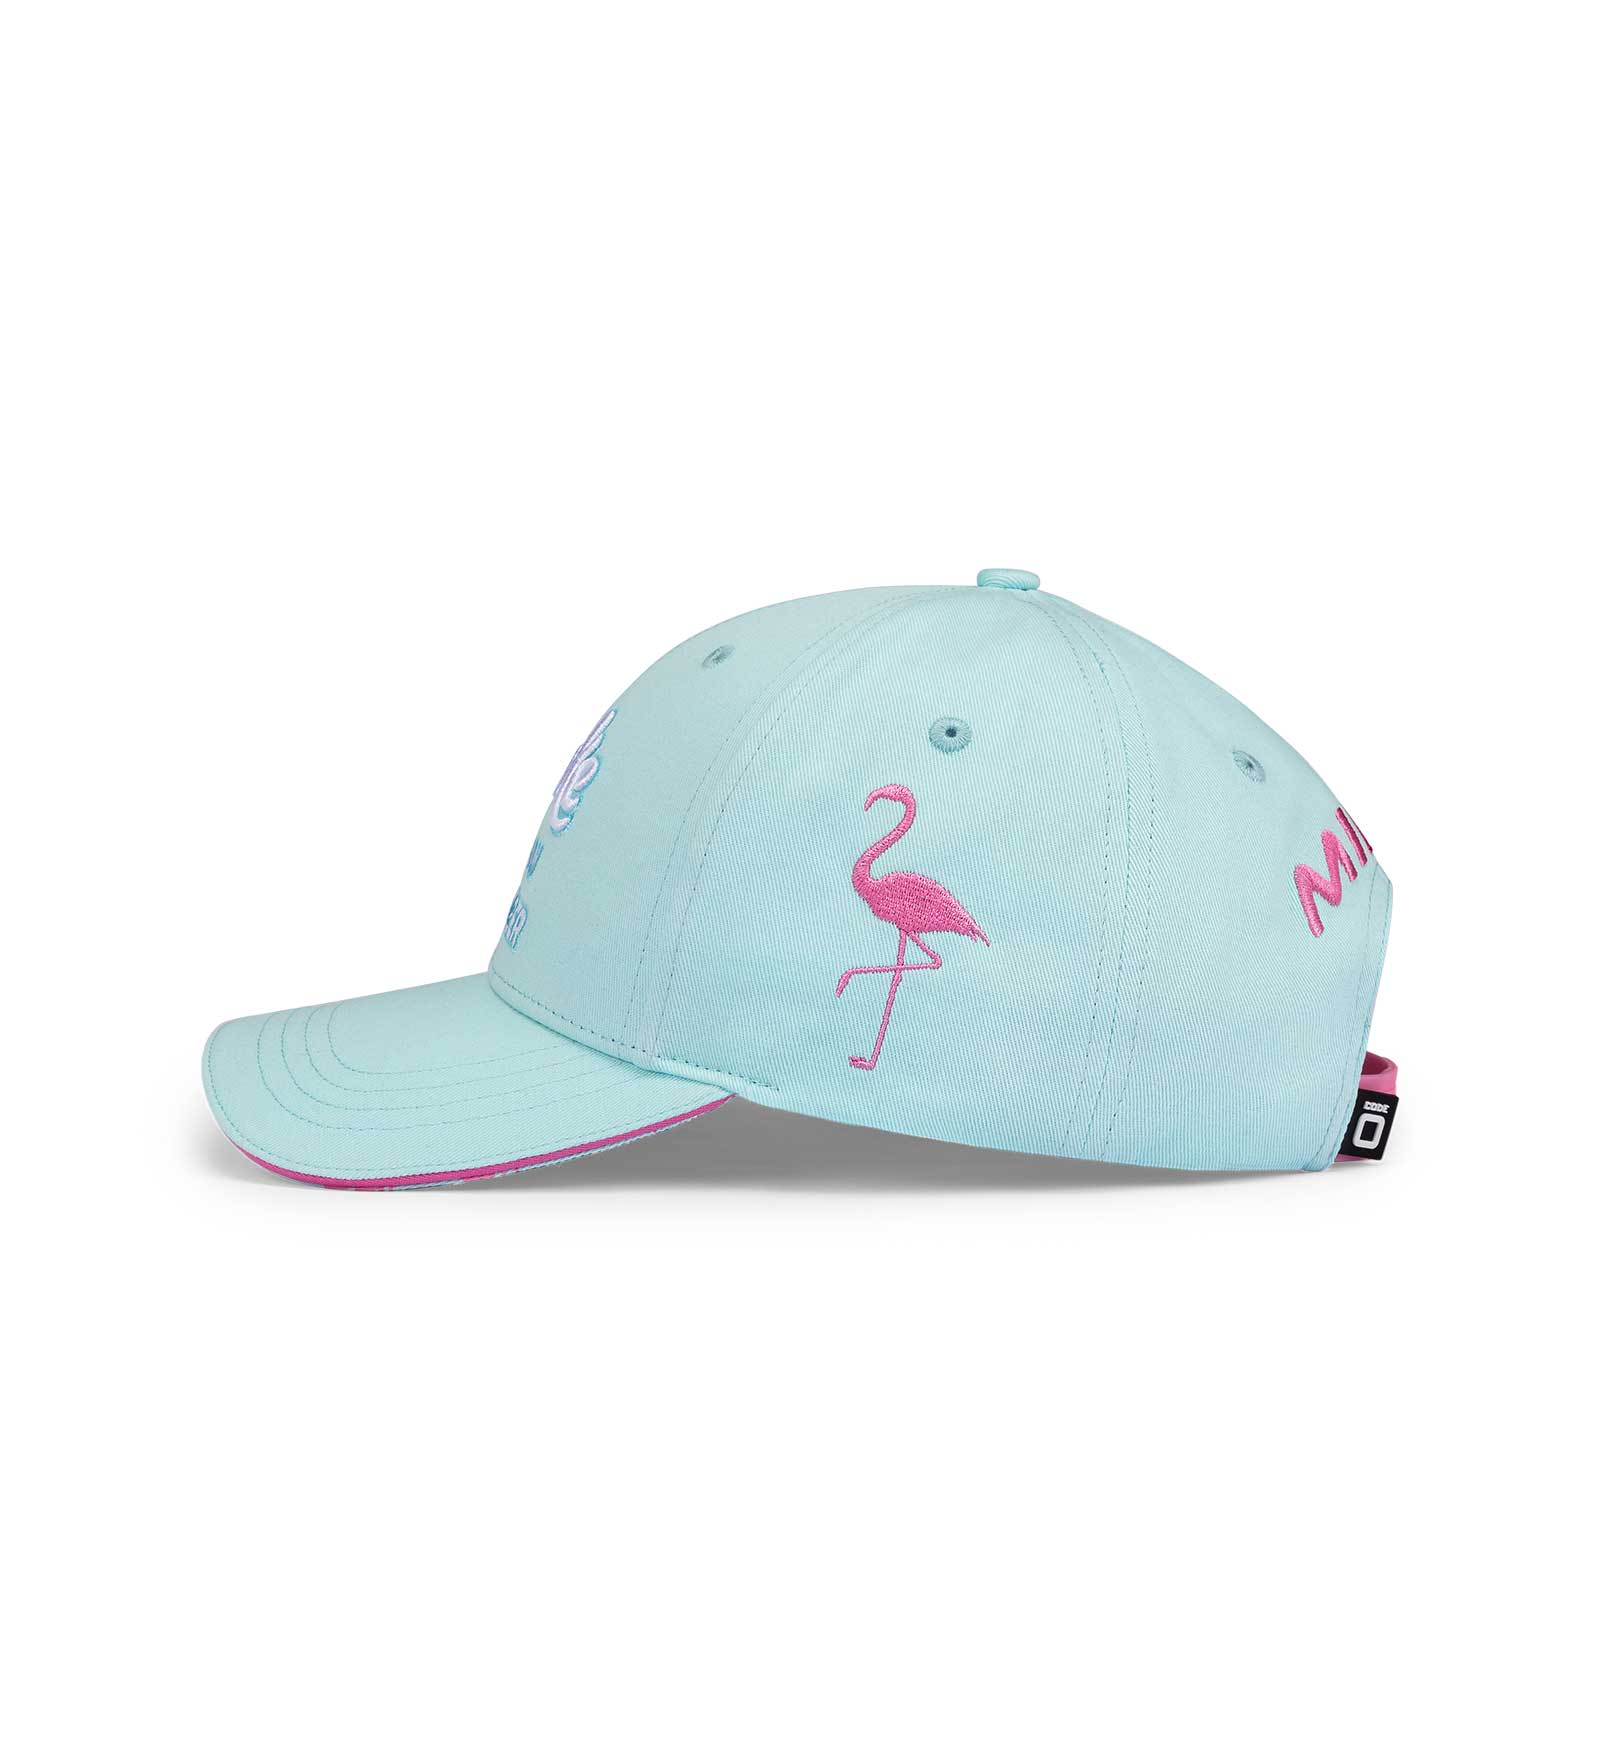 Cap Pink for Men and Women 